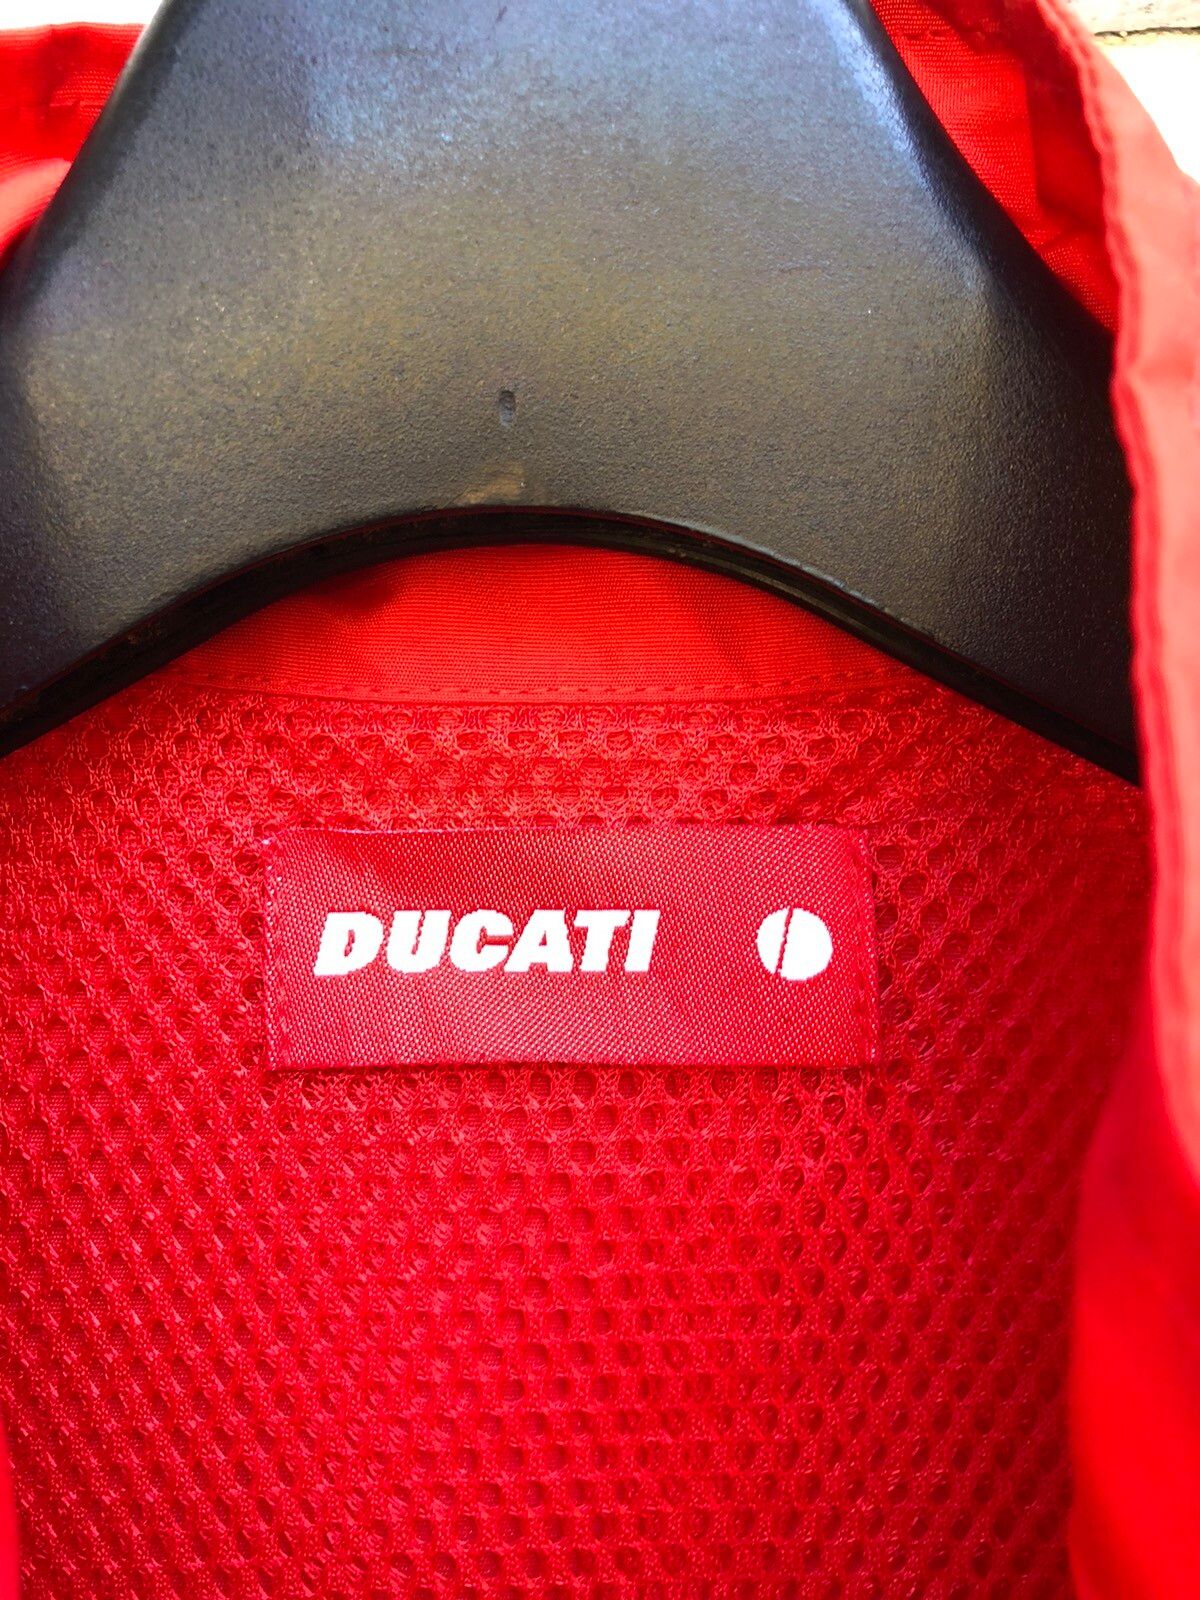 Racing - Official Ducati Desmosedici Moto Vest - 9